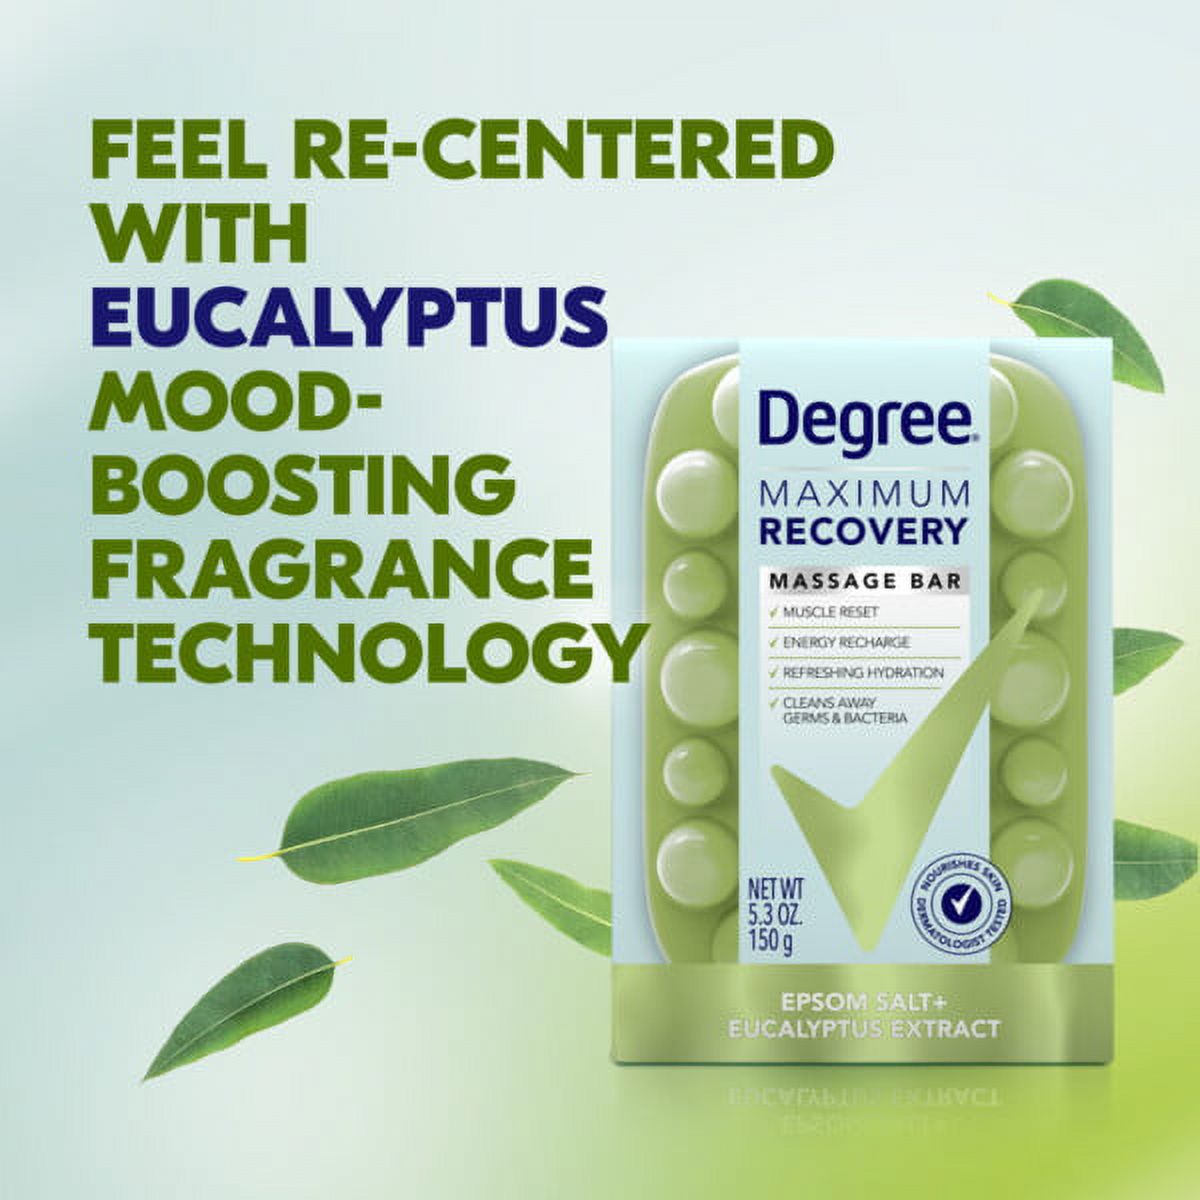 Degree Maximum Recovery Massage Bar Soap Eucalyptus Extract, 5 Oz. - image 3 of 14